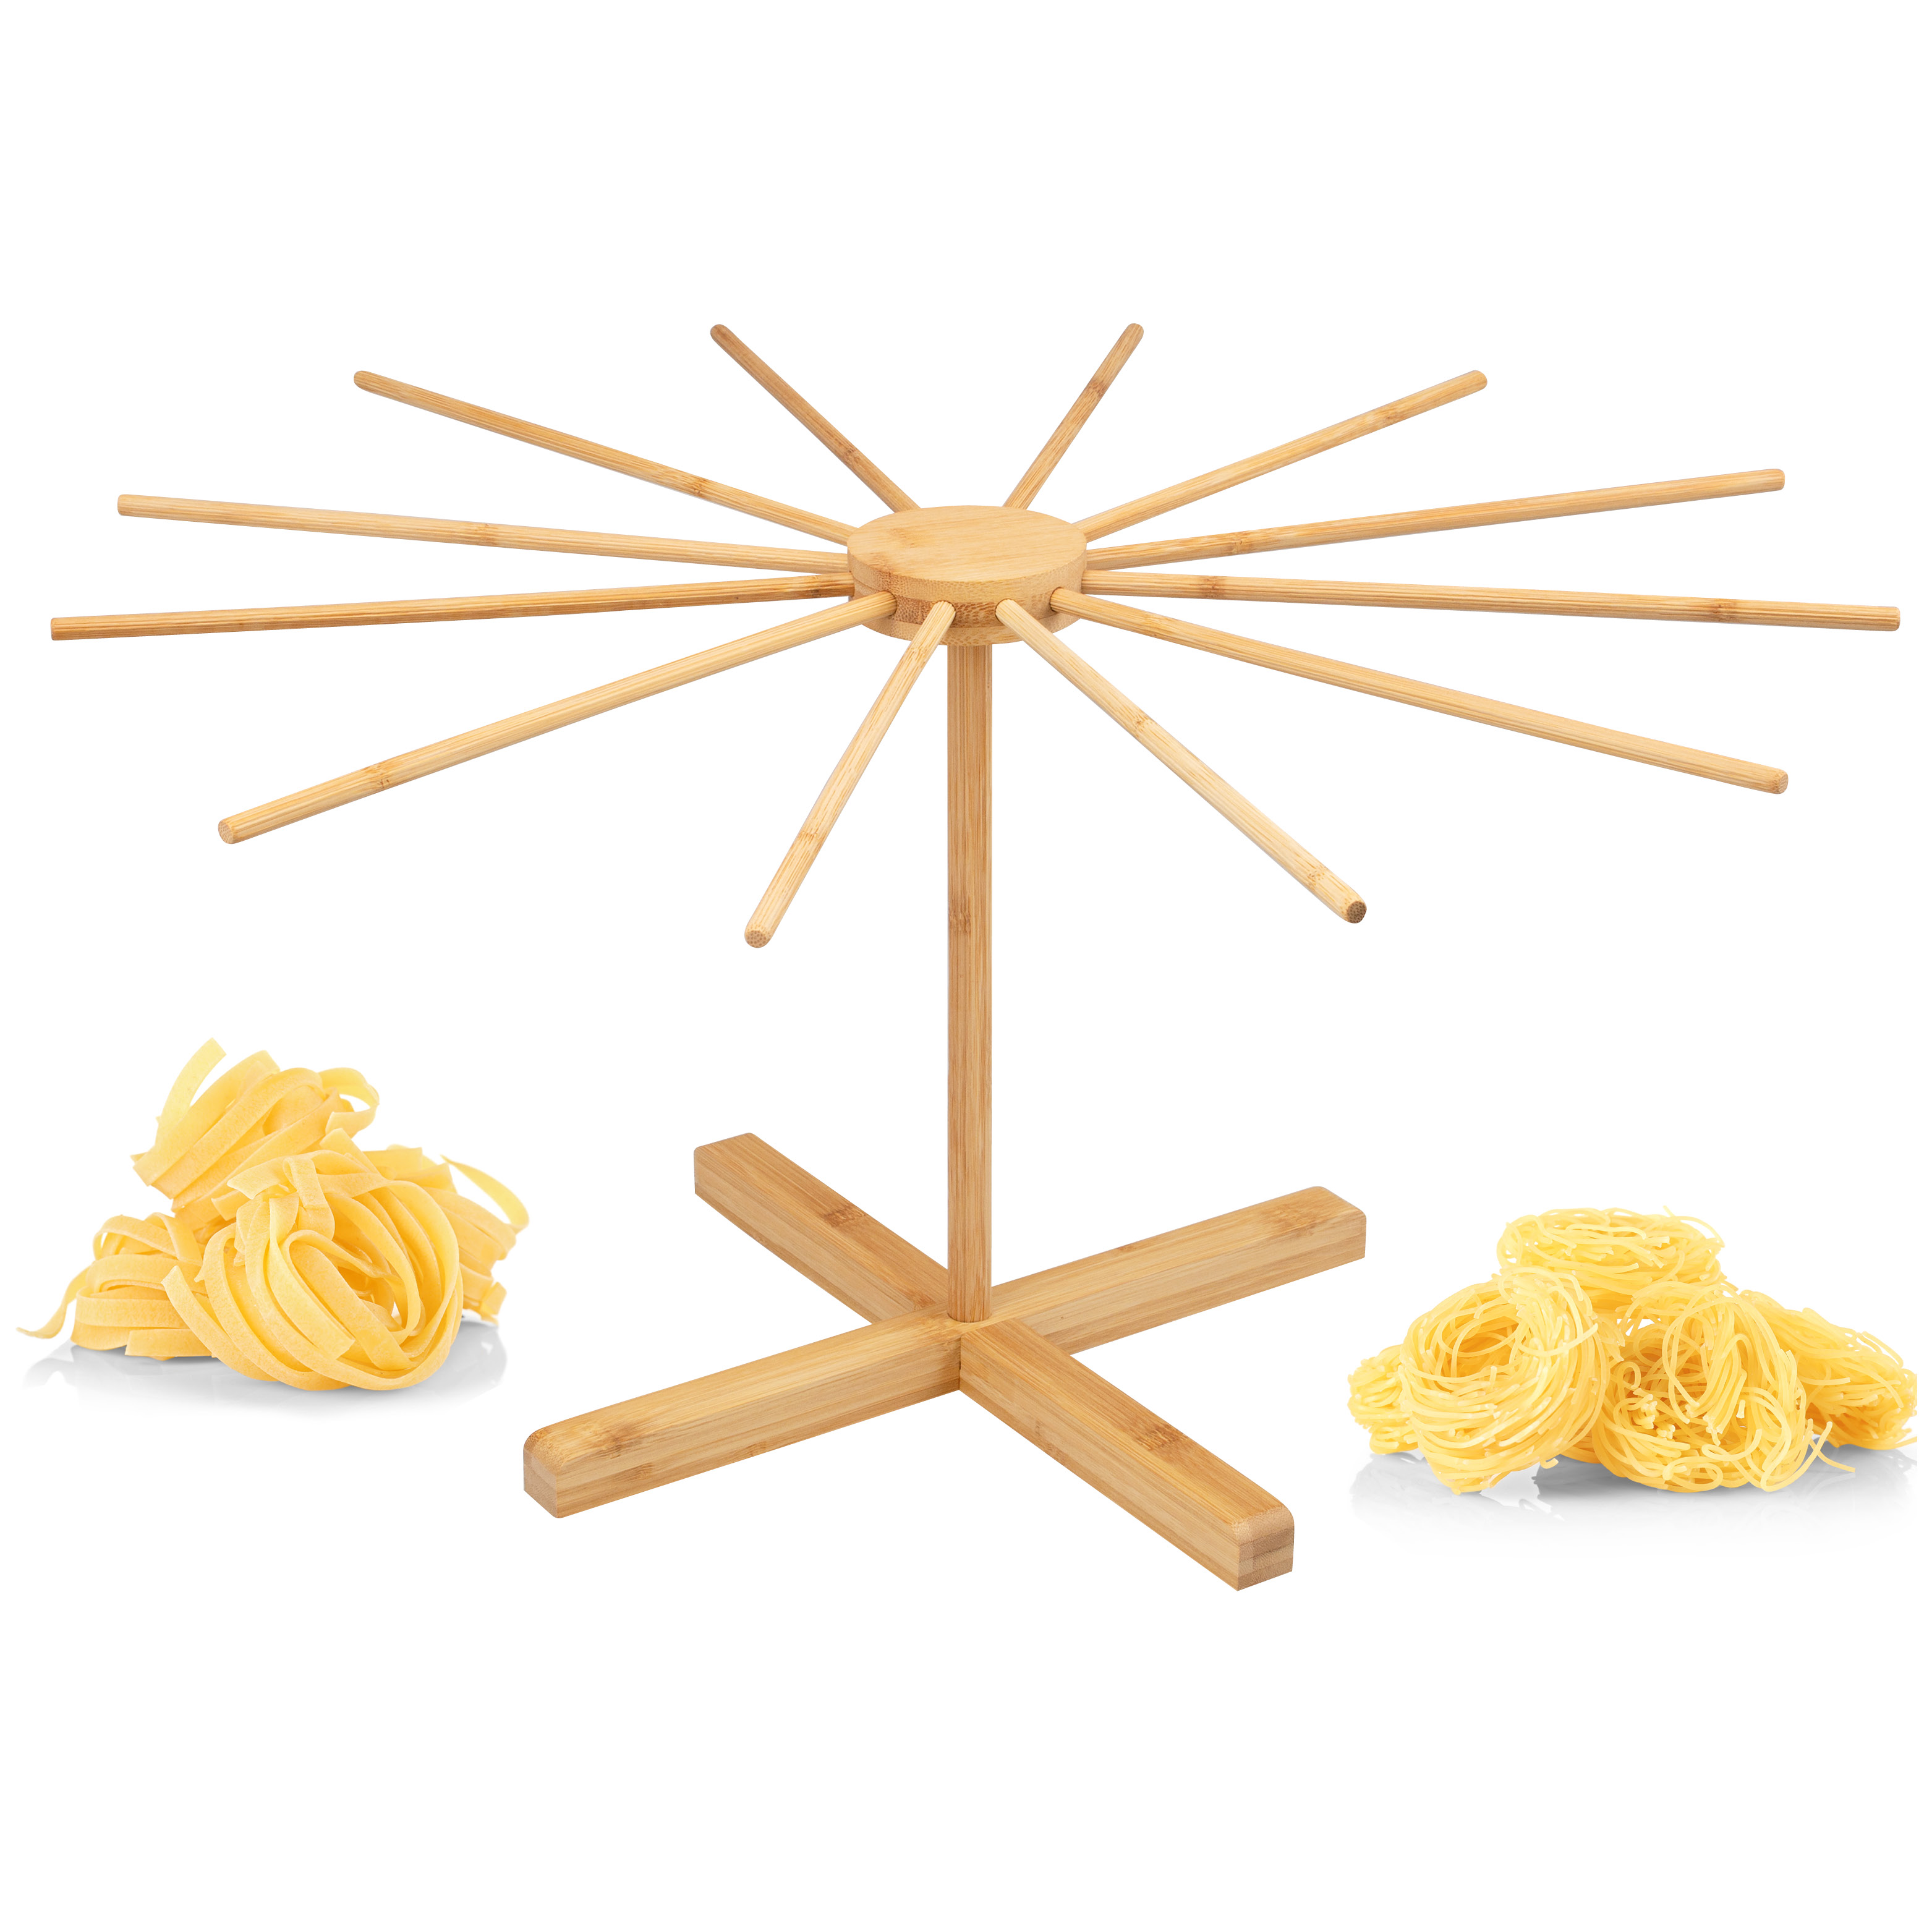 Nudeltrockner aus Bambus – Nudelständer für selbstgemachte Pasta, faltbar // Pastatrockner